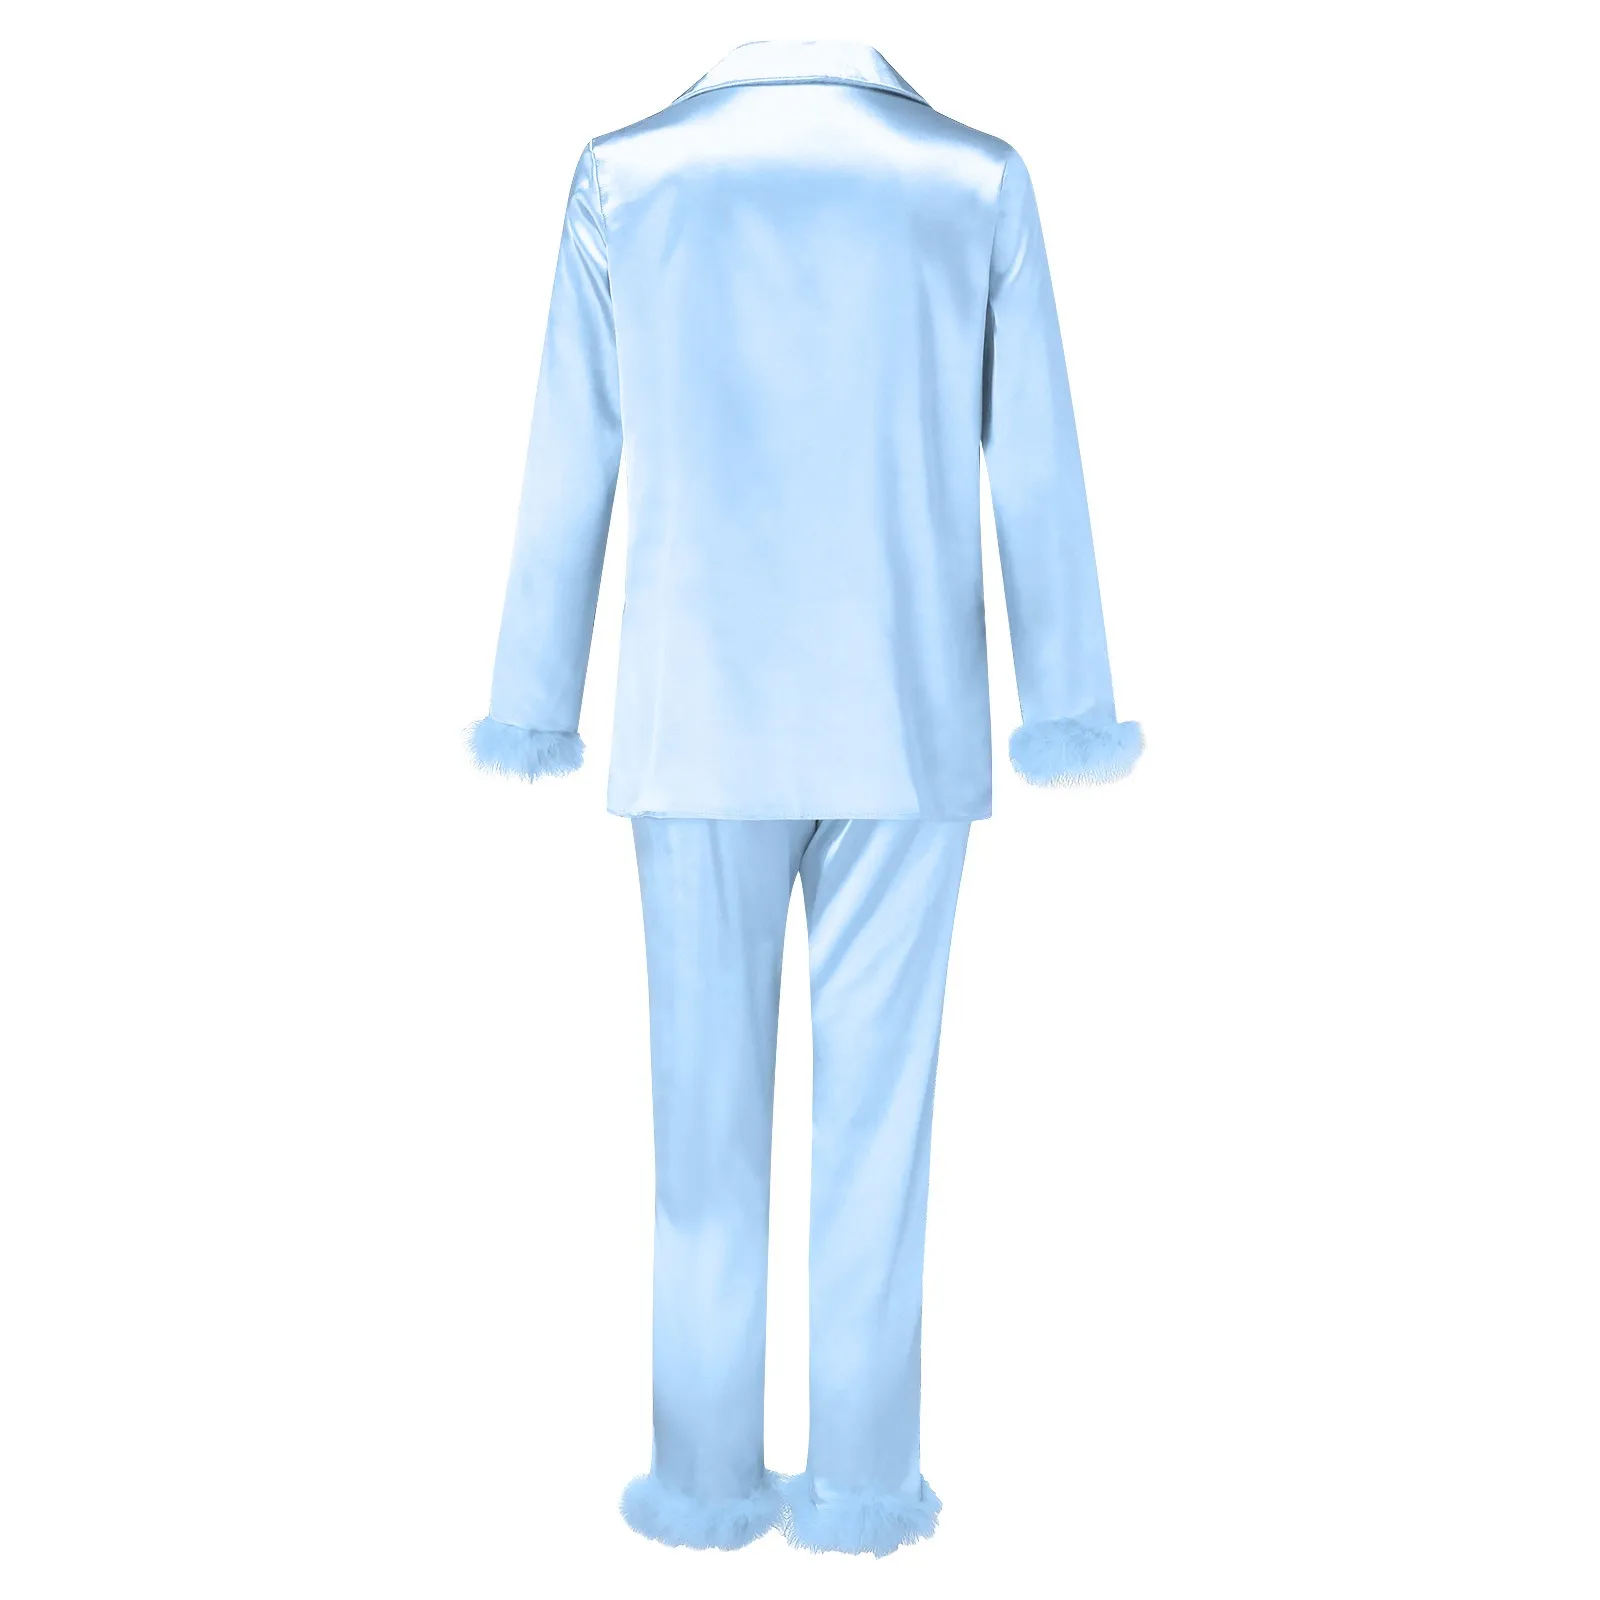 silk pj set Womens Pajamas For Sleep Ladies Solid Color Lapel Top And Feather Trousers 2PC Suit Sleepwear Set Pyjama Pour Femme wholesale L4 cotton pyjamas for ladies